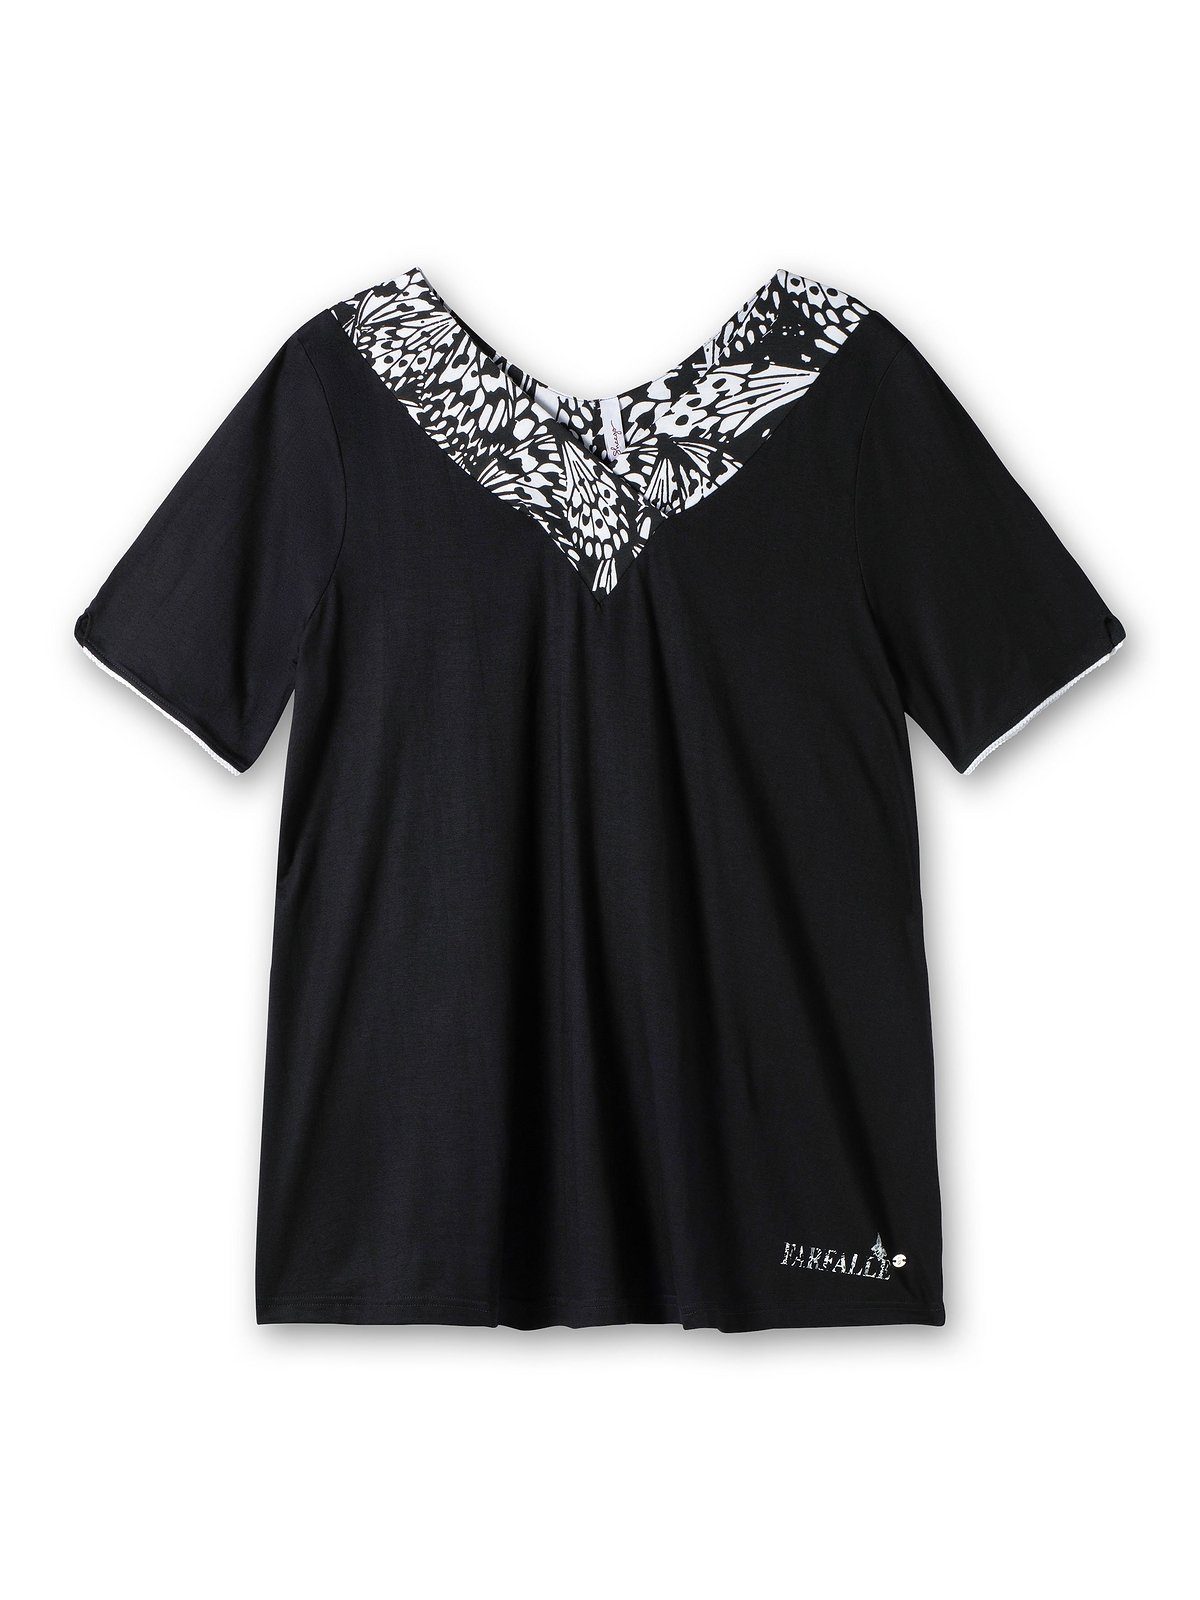 Sheego Blende Longshirt mit breiter am bedruckt Größen schwarz Große V-Ausschnitt